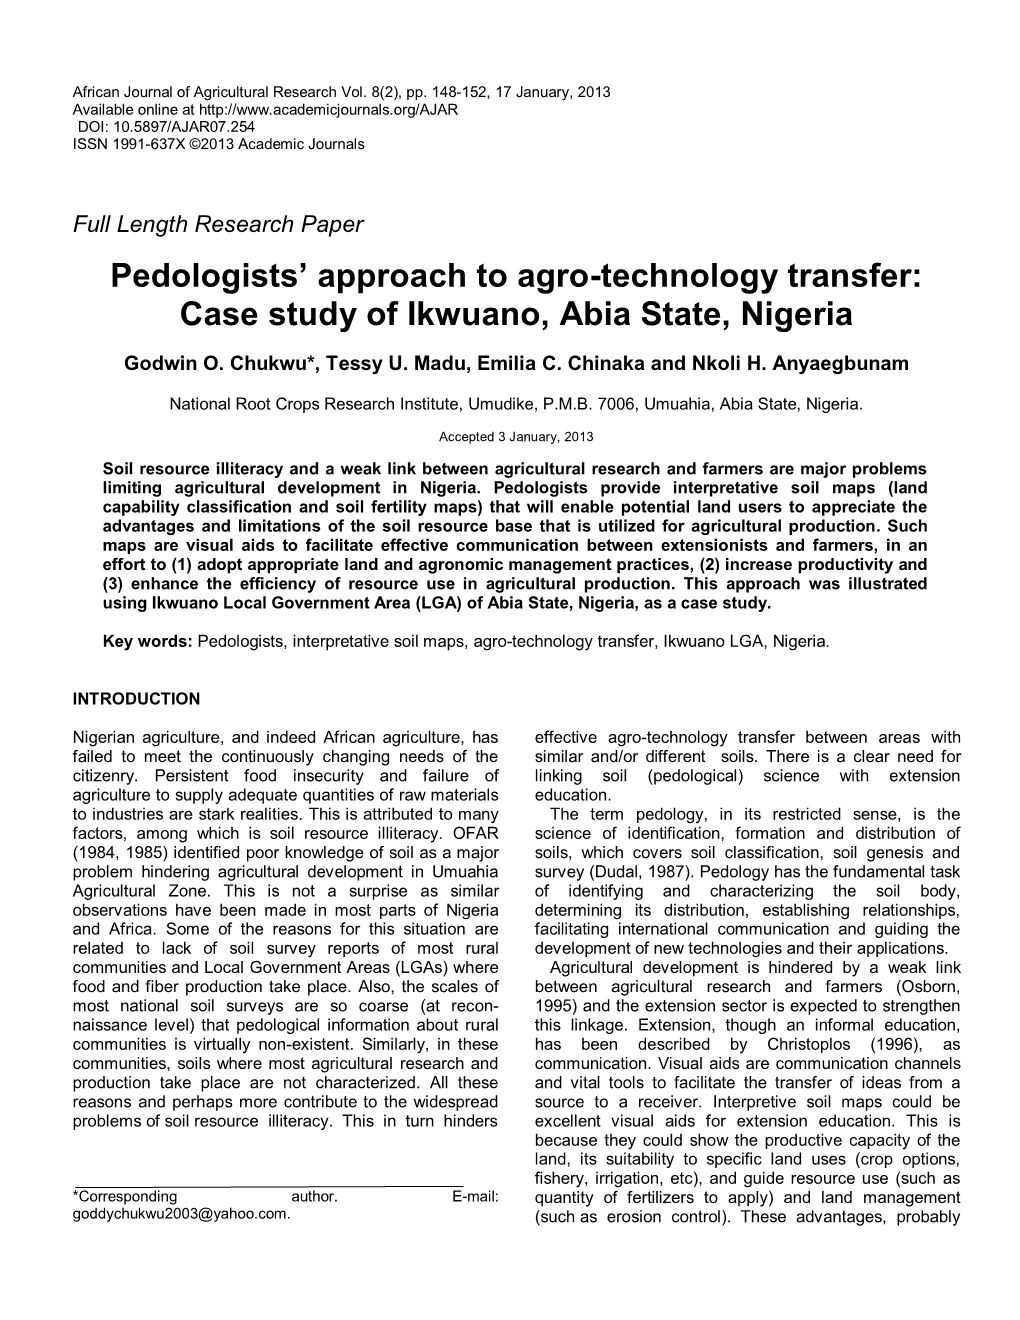 Case Study of Ikwuano, Abia State, Nigeria